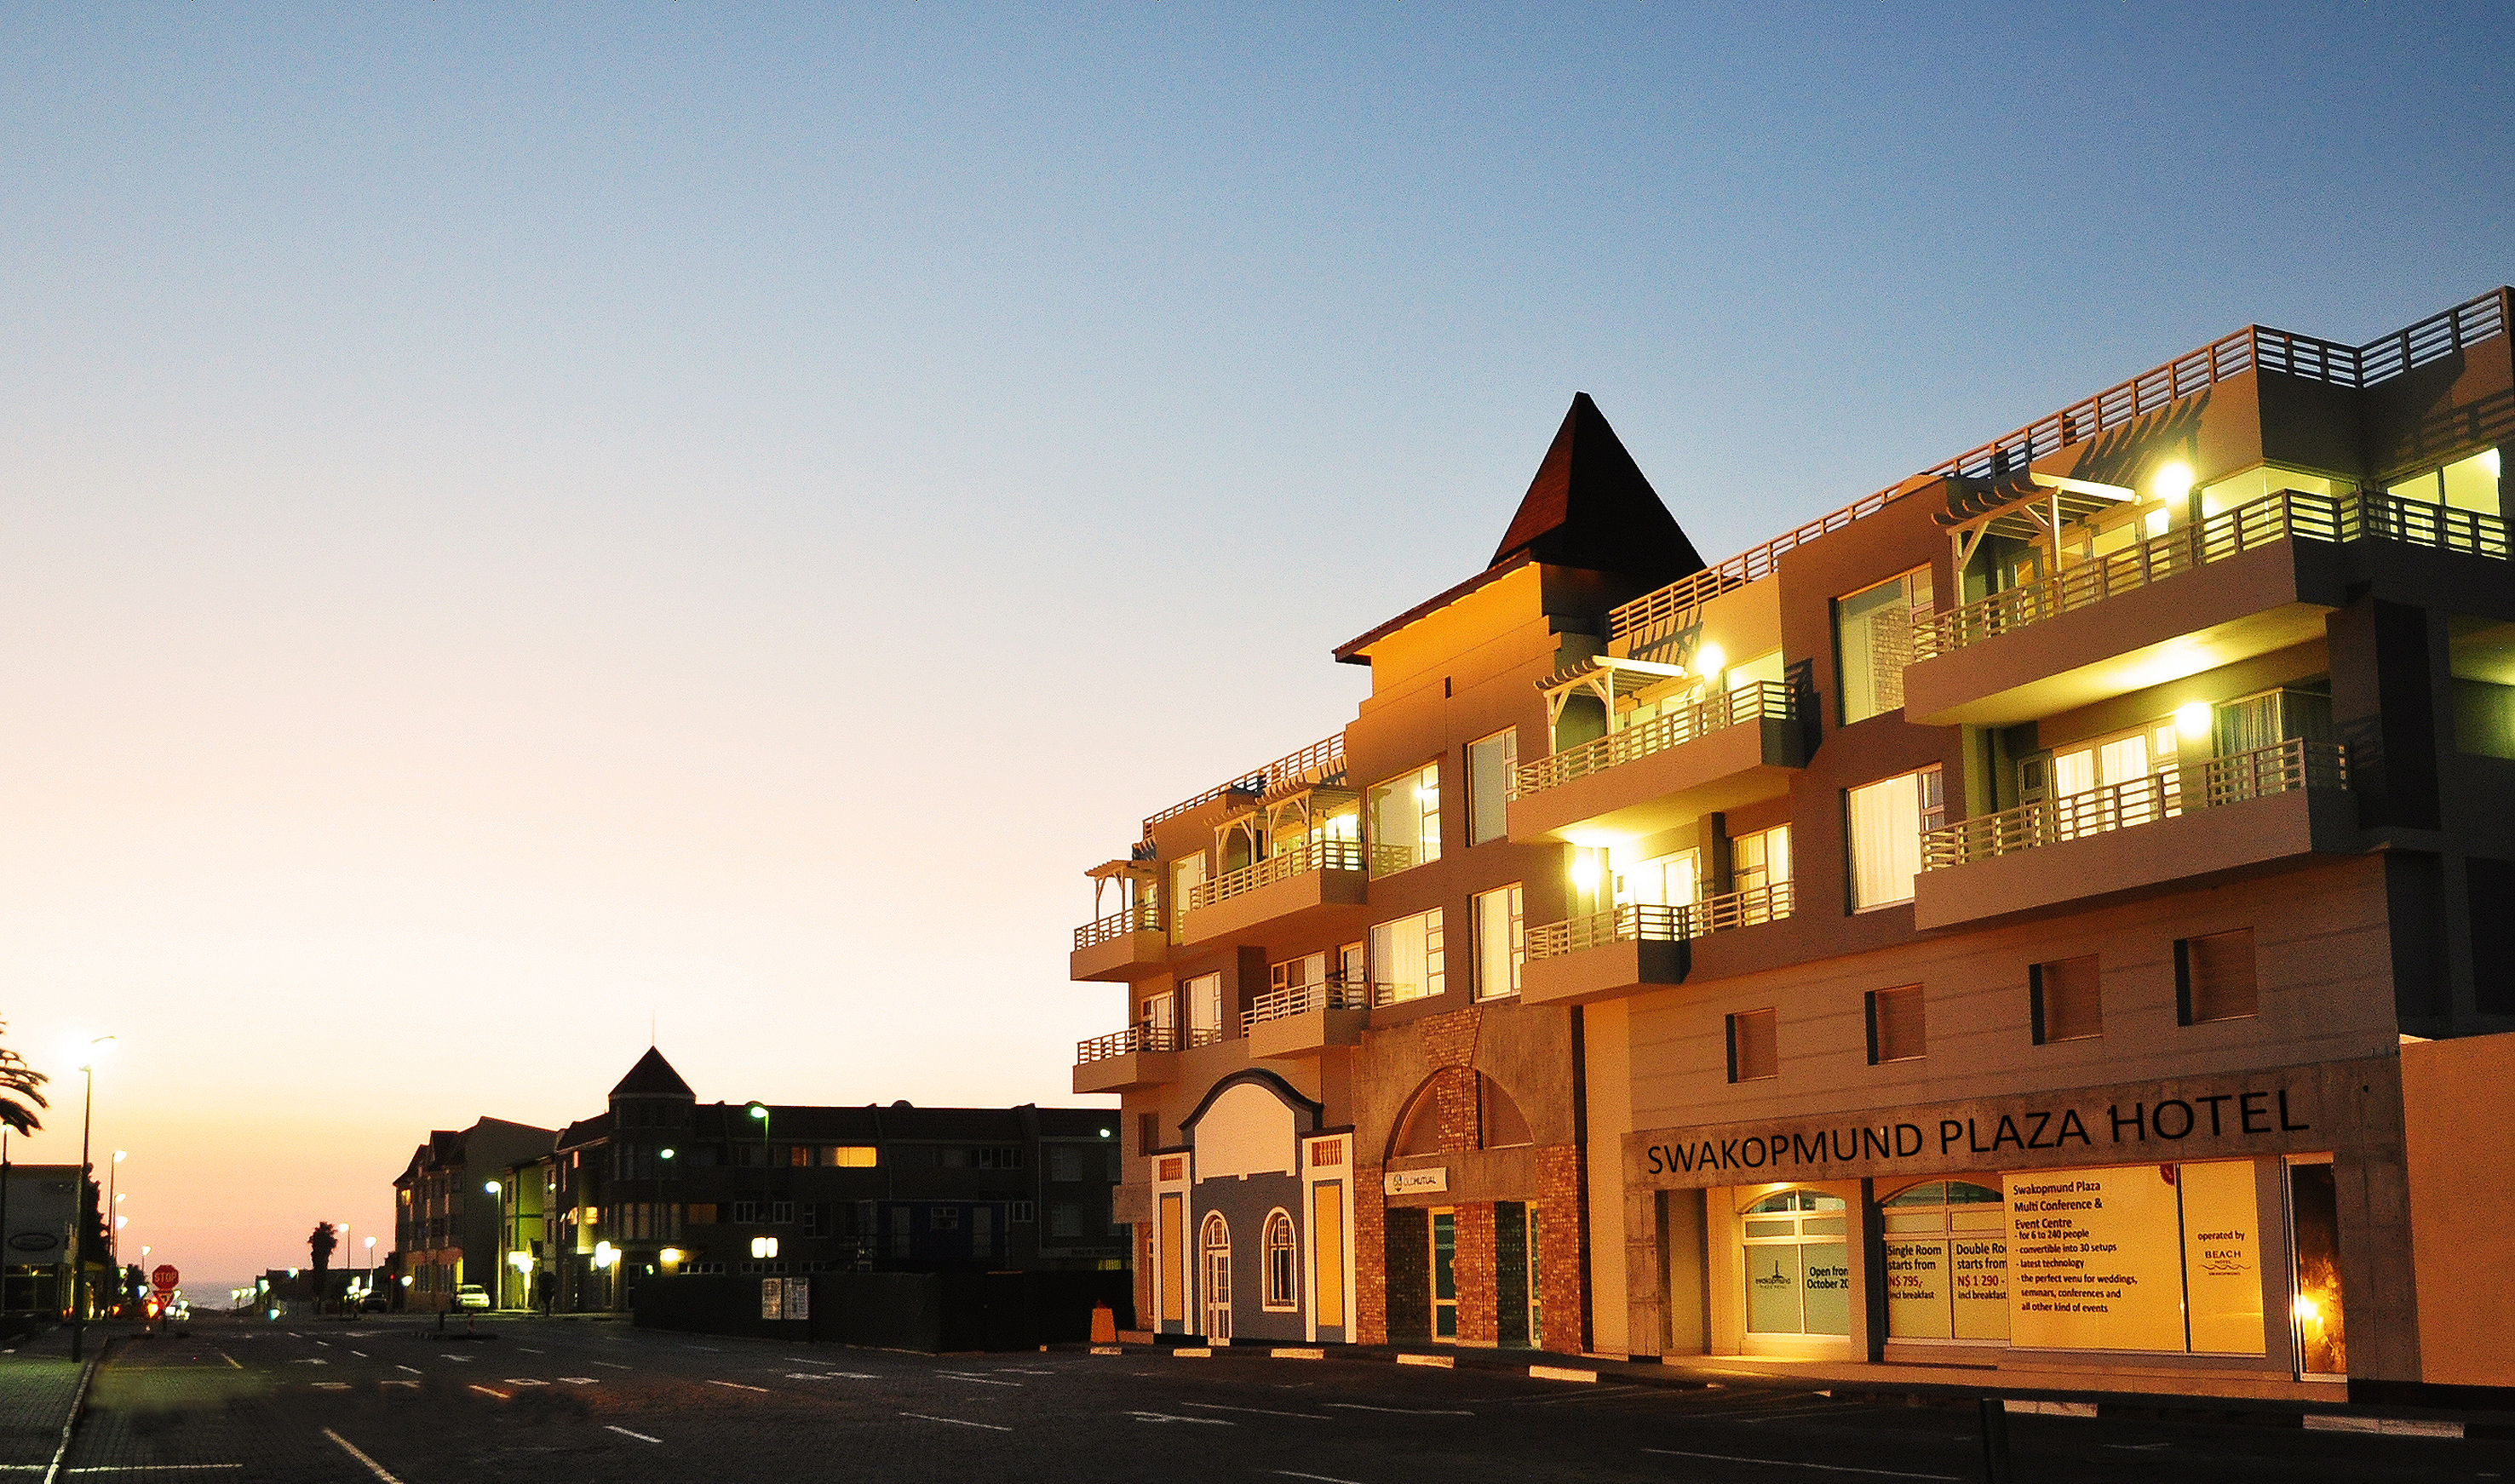 aha Swakopmund Plaza Hotel image